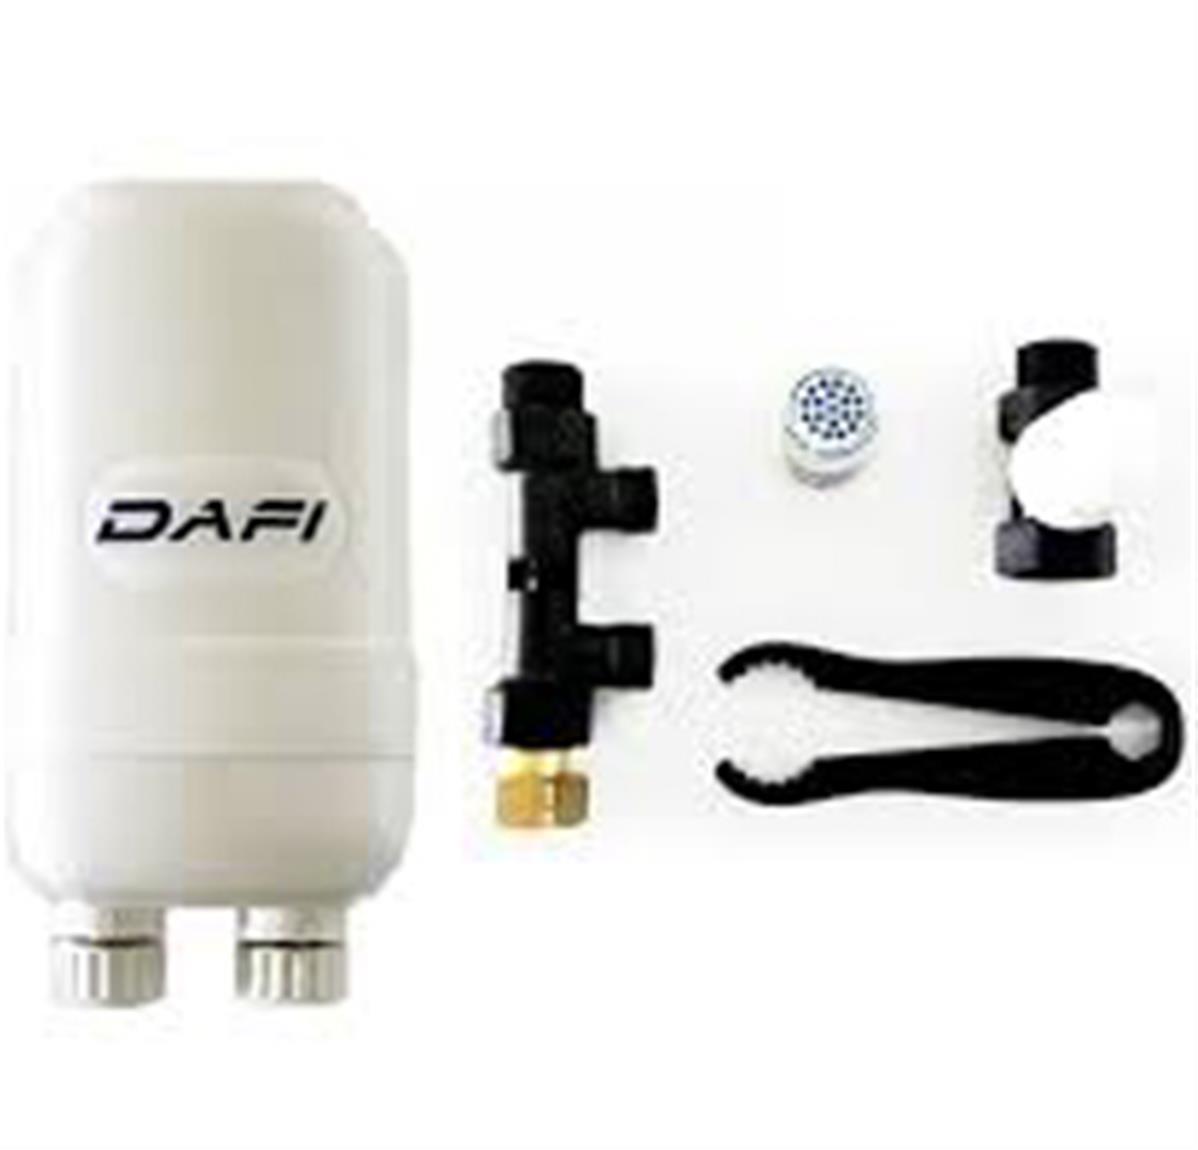 Chauffe-eau instantané DAFI 11 kw - 400 V douche lavabo évier